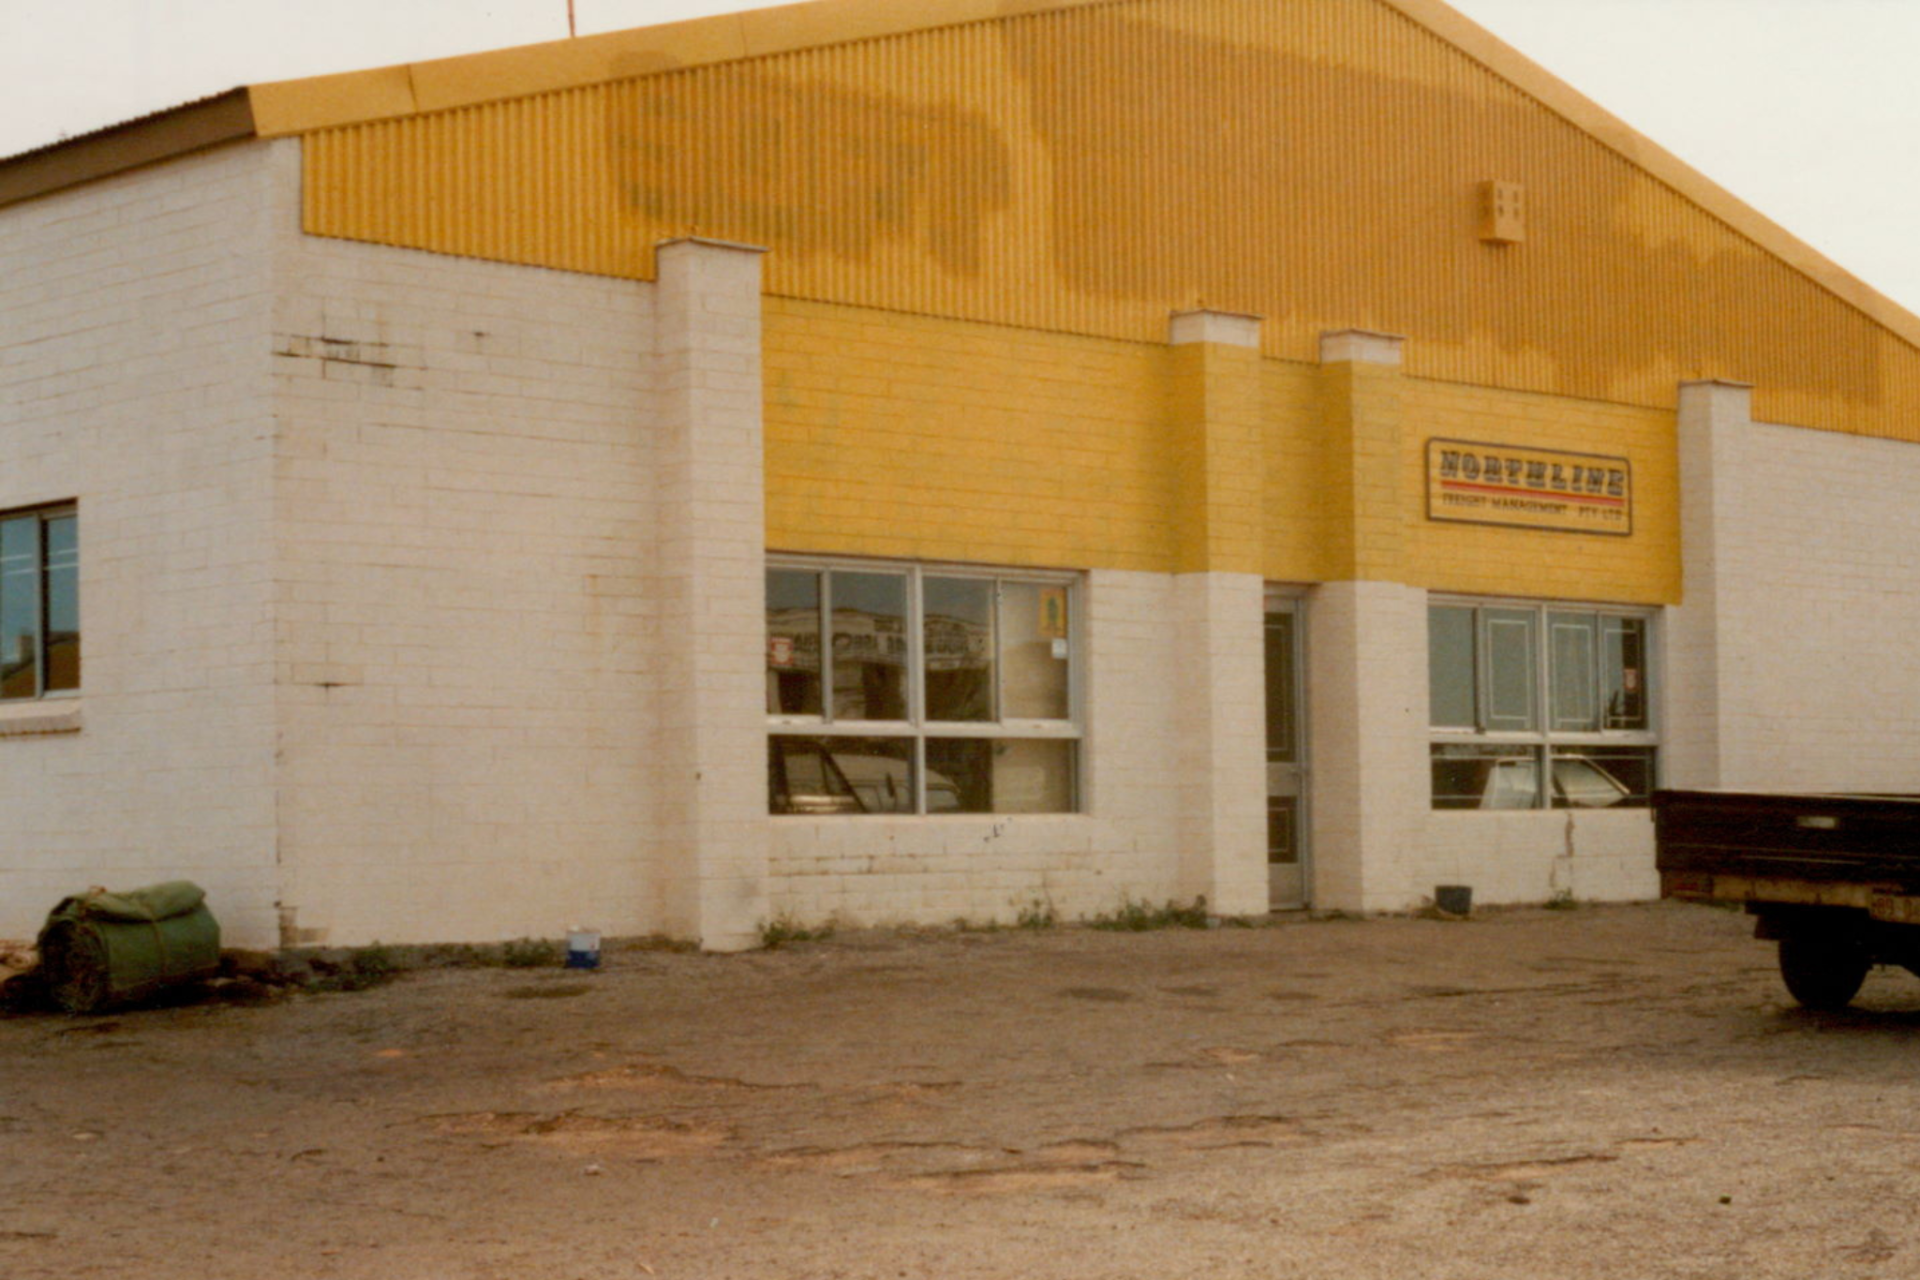 Northline Sadgroves Crescent Depot in Darwin 1983